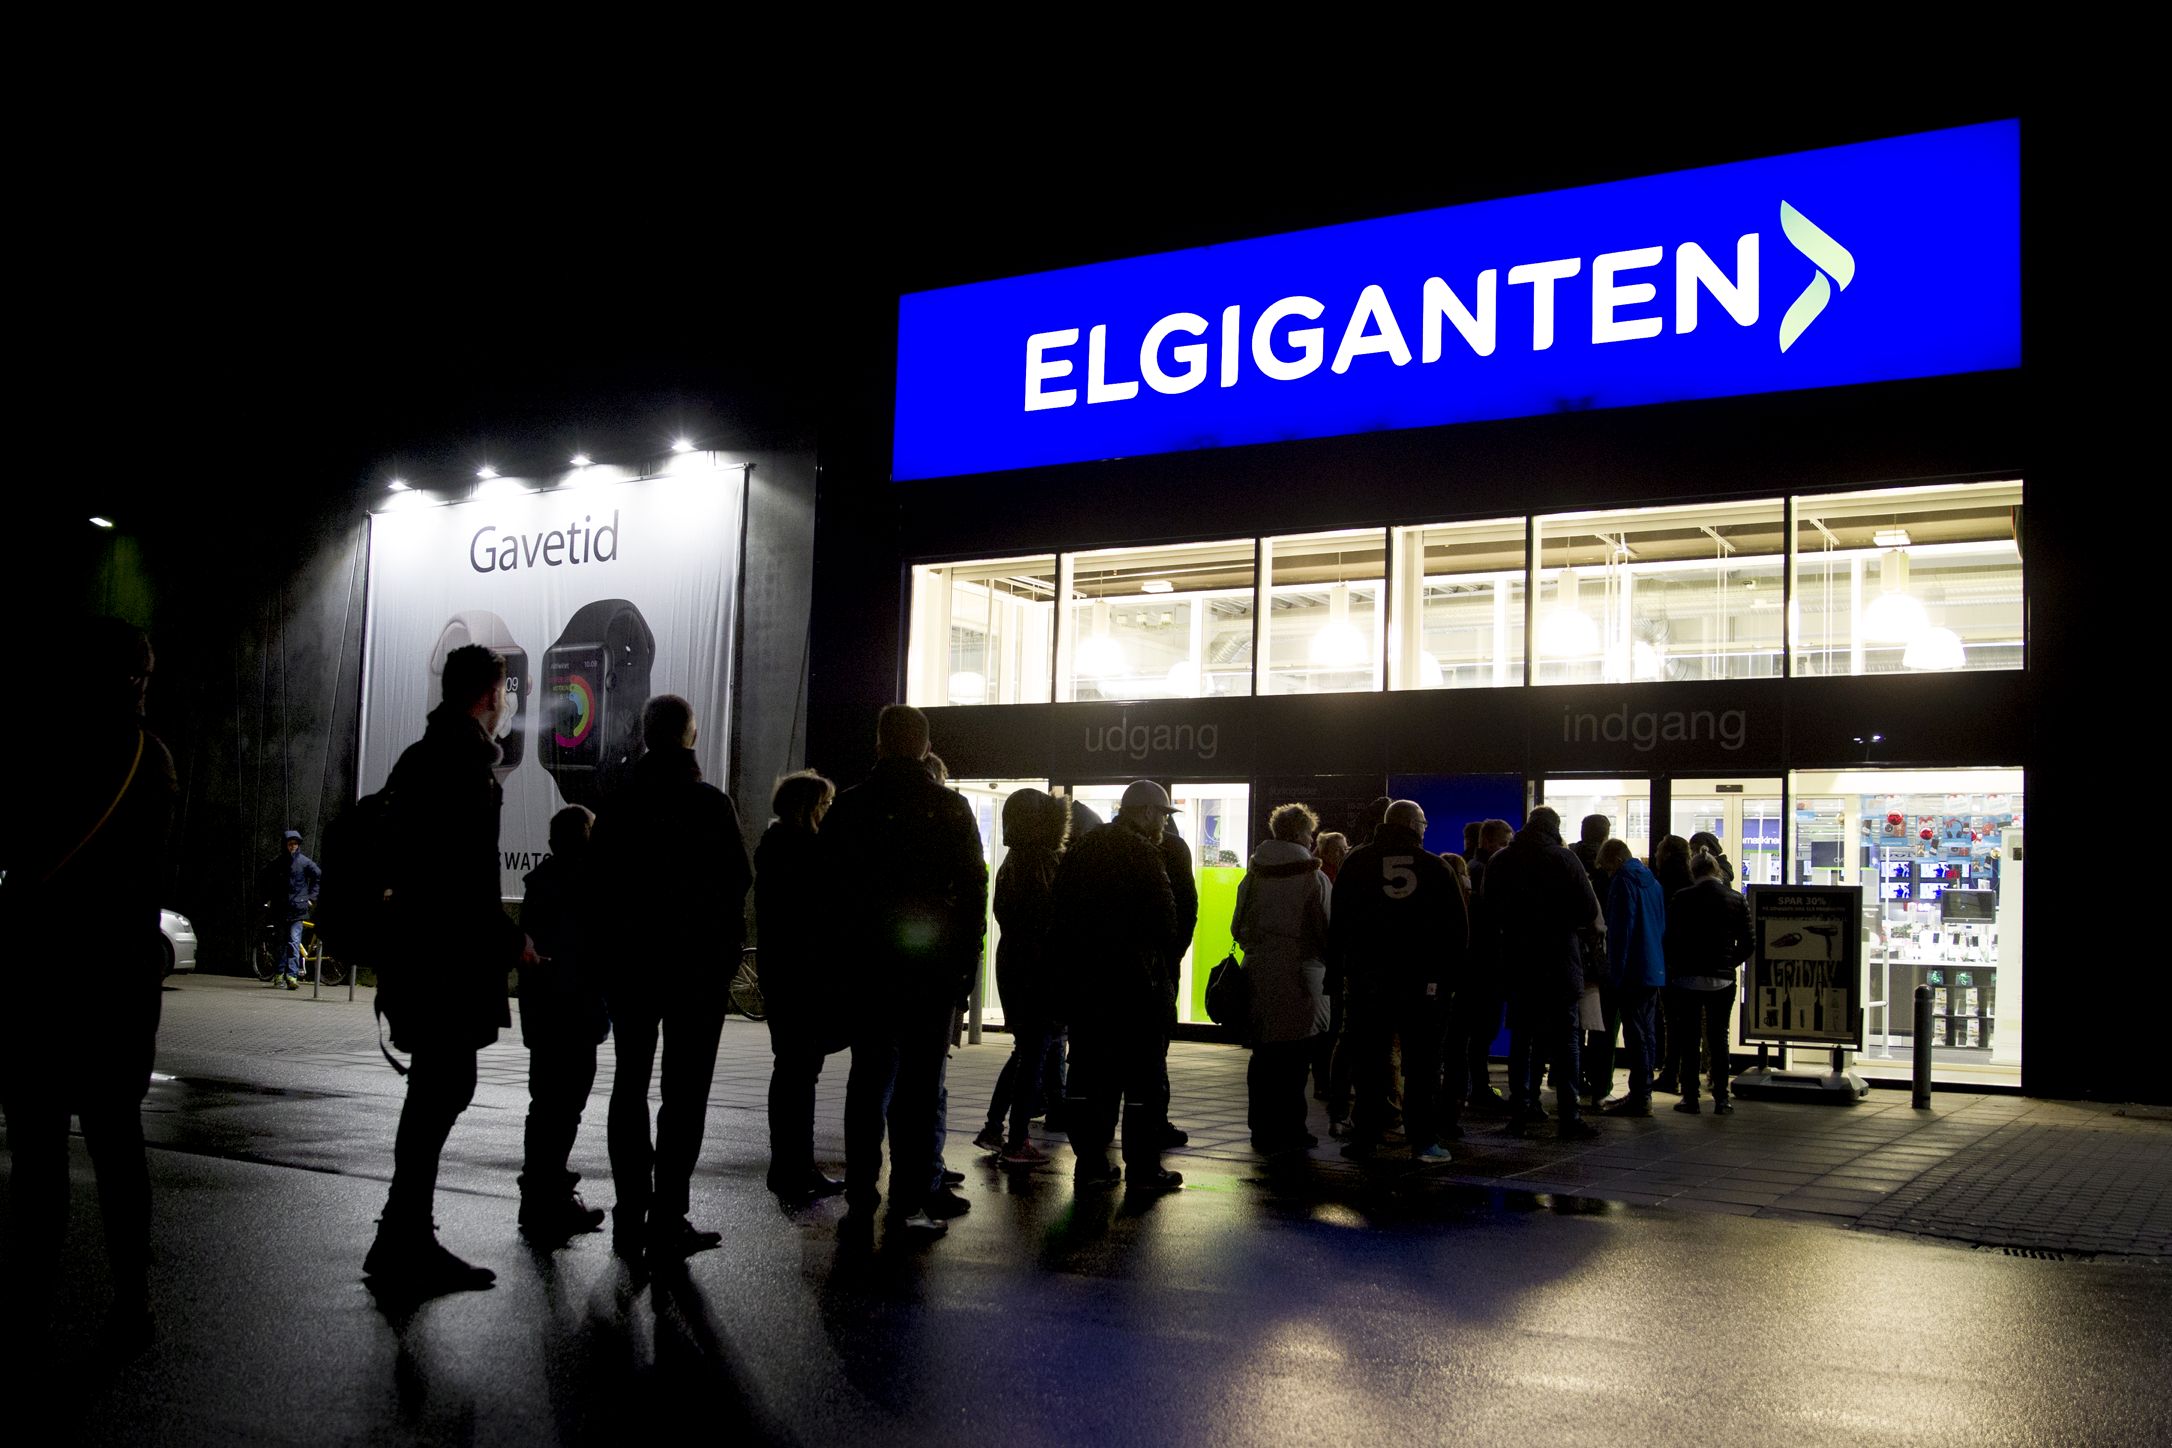 Black Friday hos Elgiganten..
Foto: Jakob Stigsen Andersen